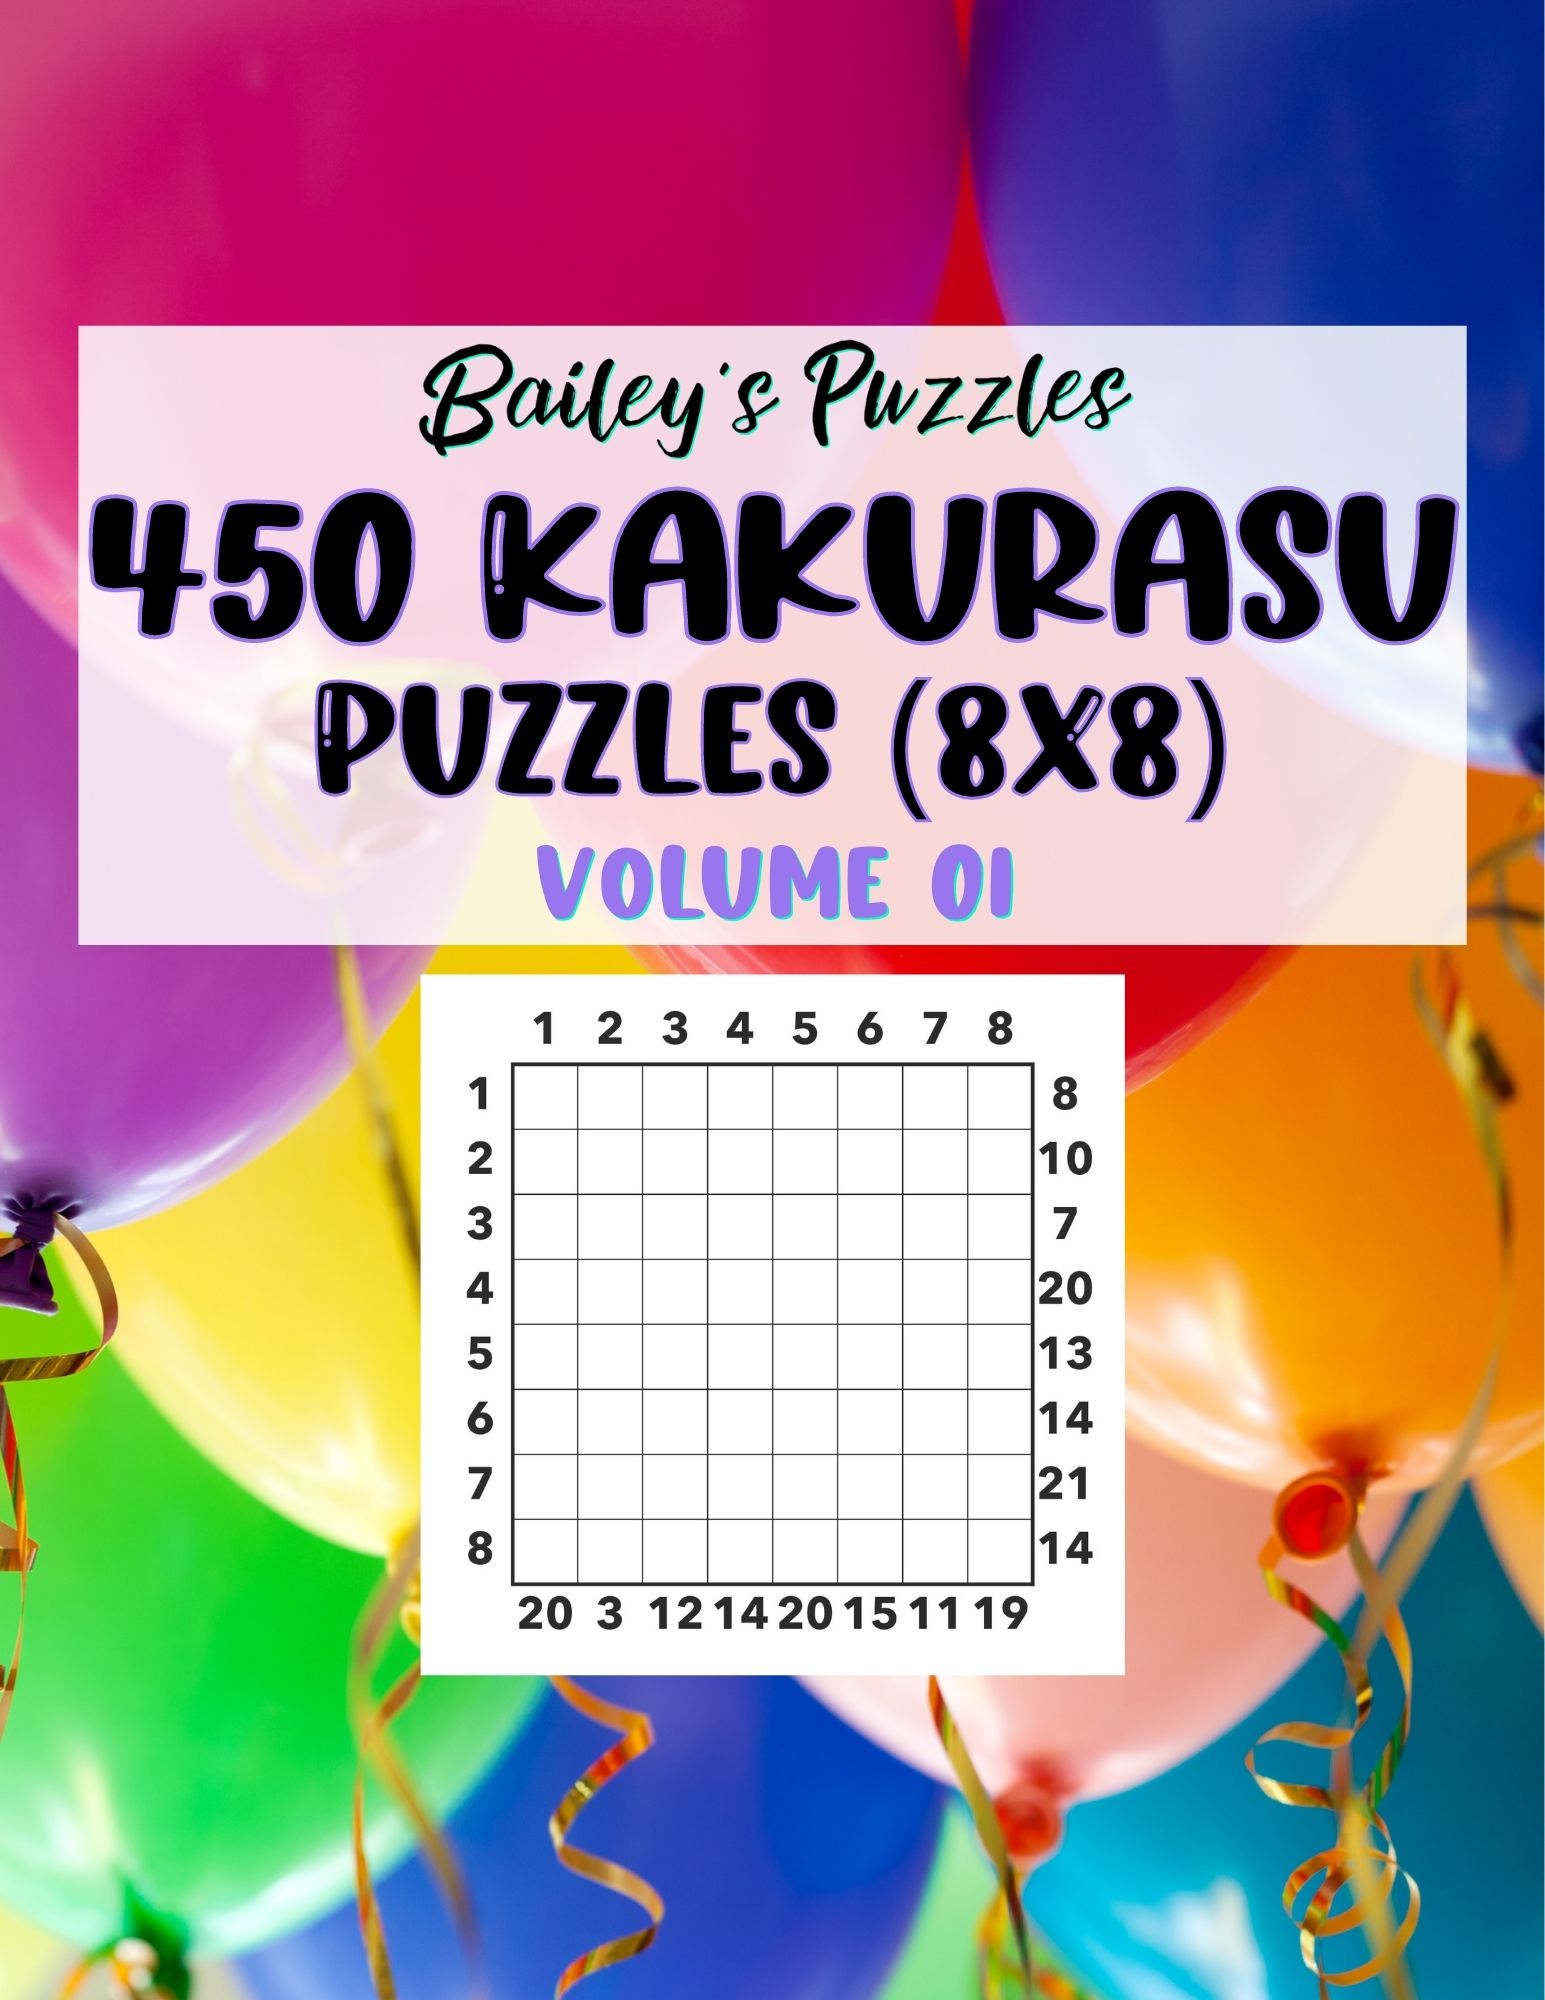 Buy Now: 450 Kakurasu Puzzles 8x8